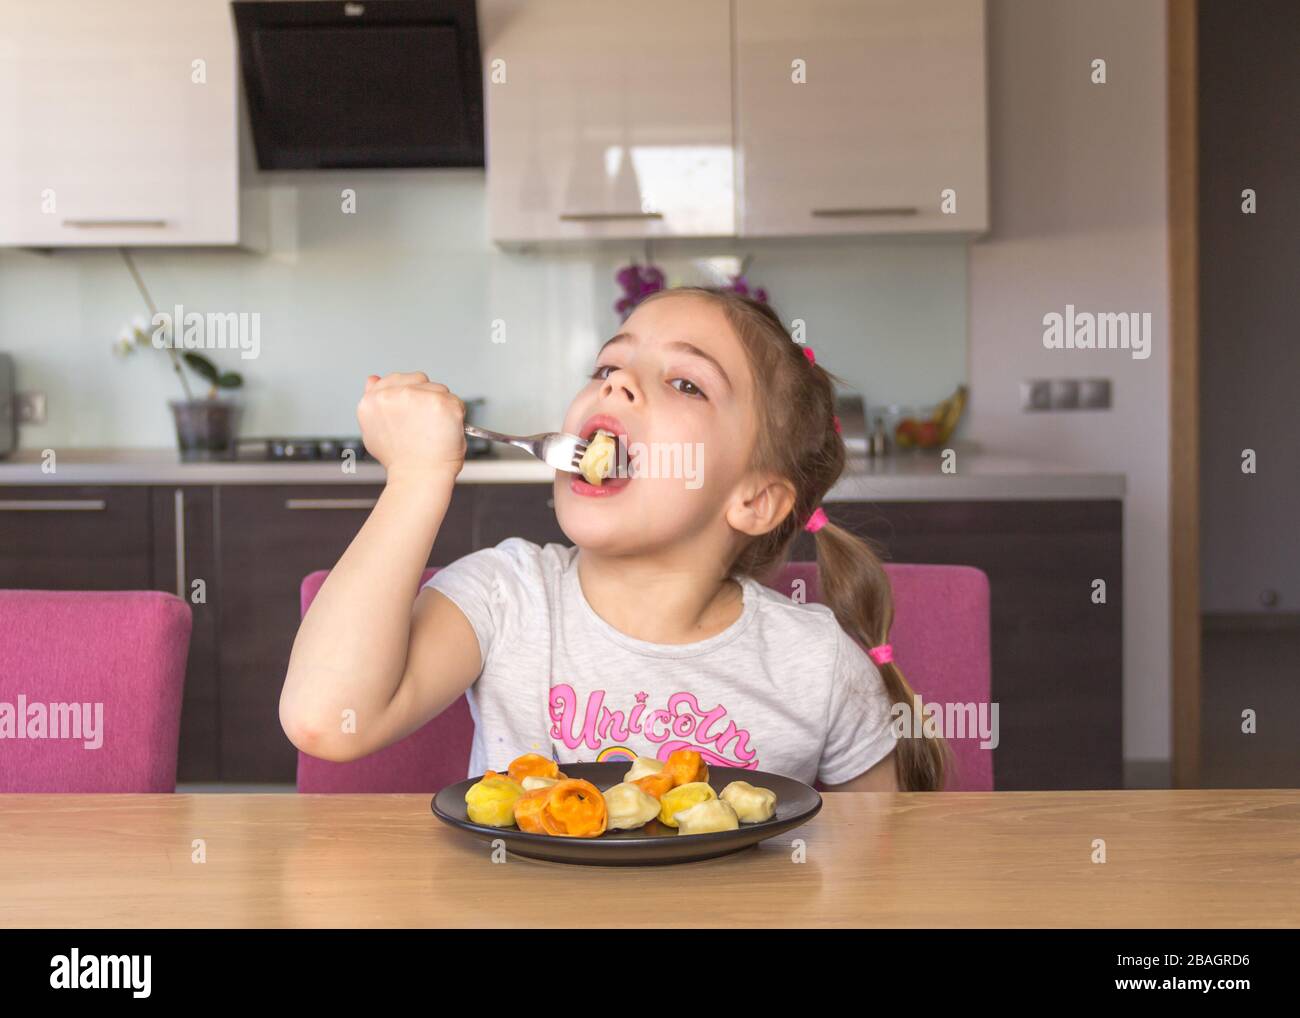 Little girl eats colorful pelmeni. Coronavirus quarantine concept. Stay at home. Stock Photo